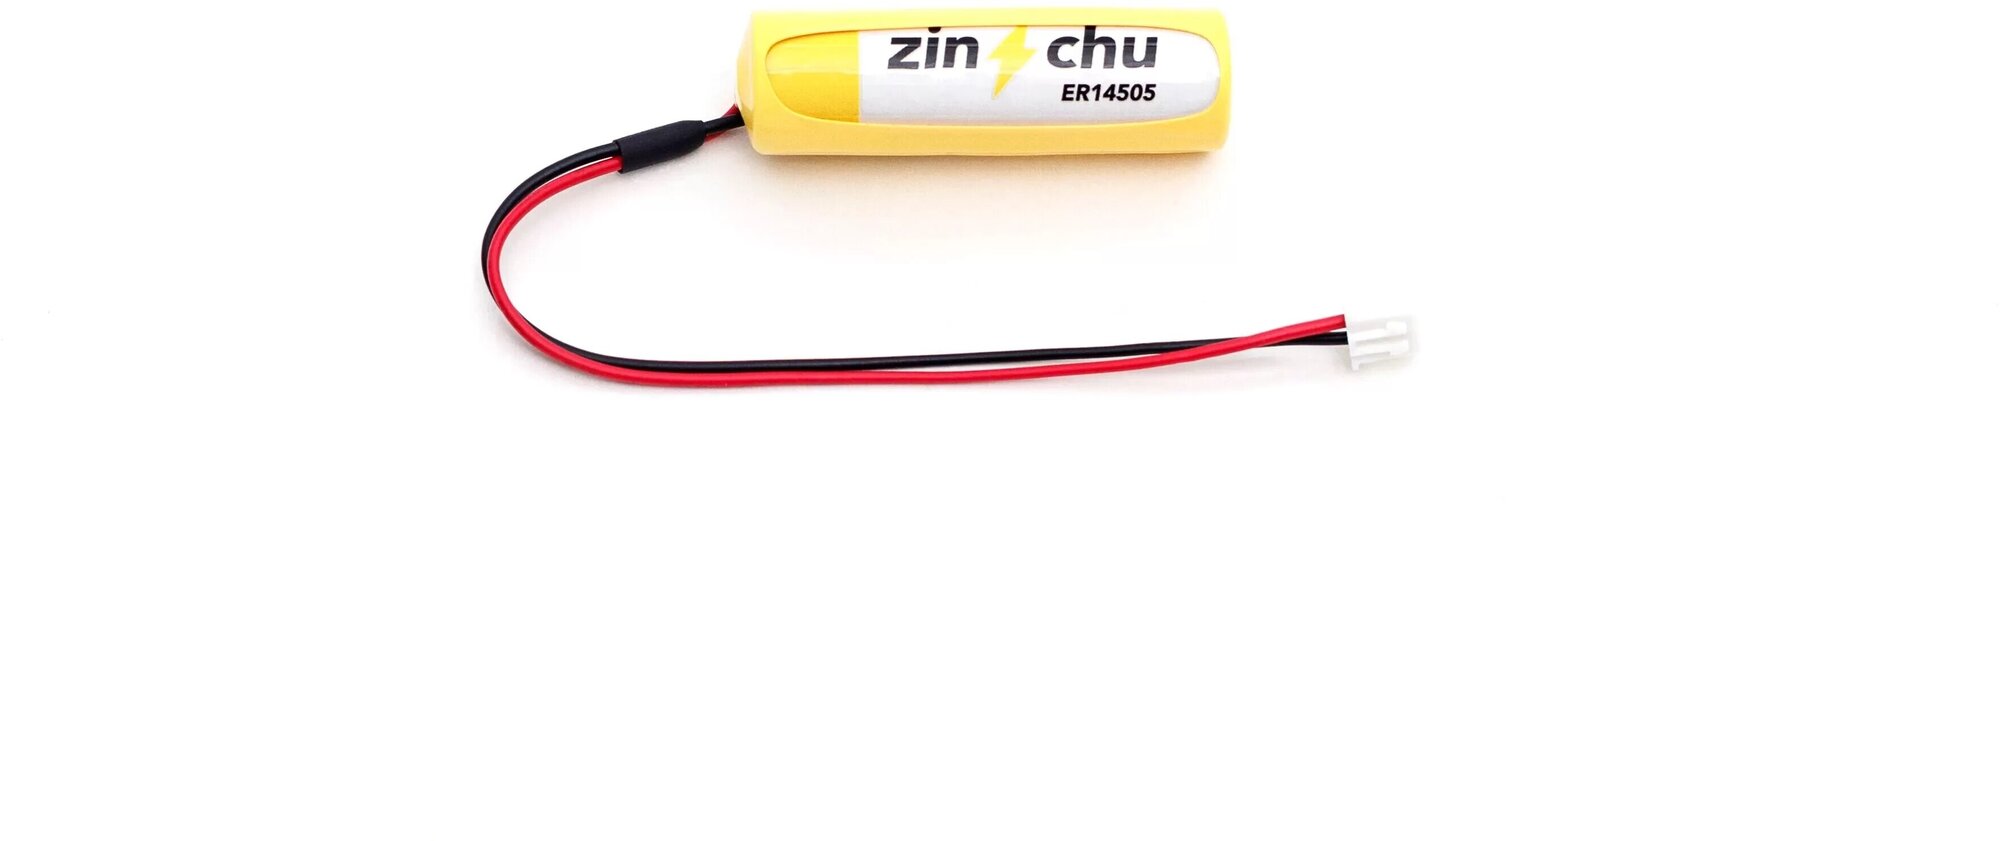 Батарейка для счетчика тепла Hiterm, ПУТМ-1, 3V Zinchu